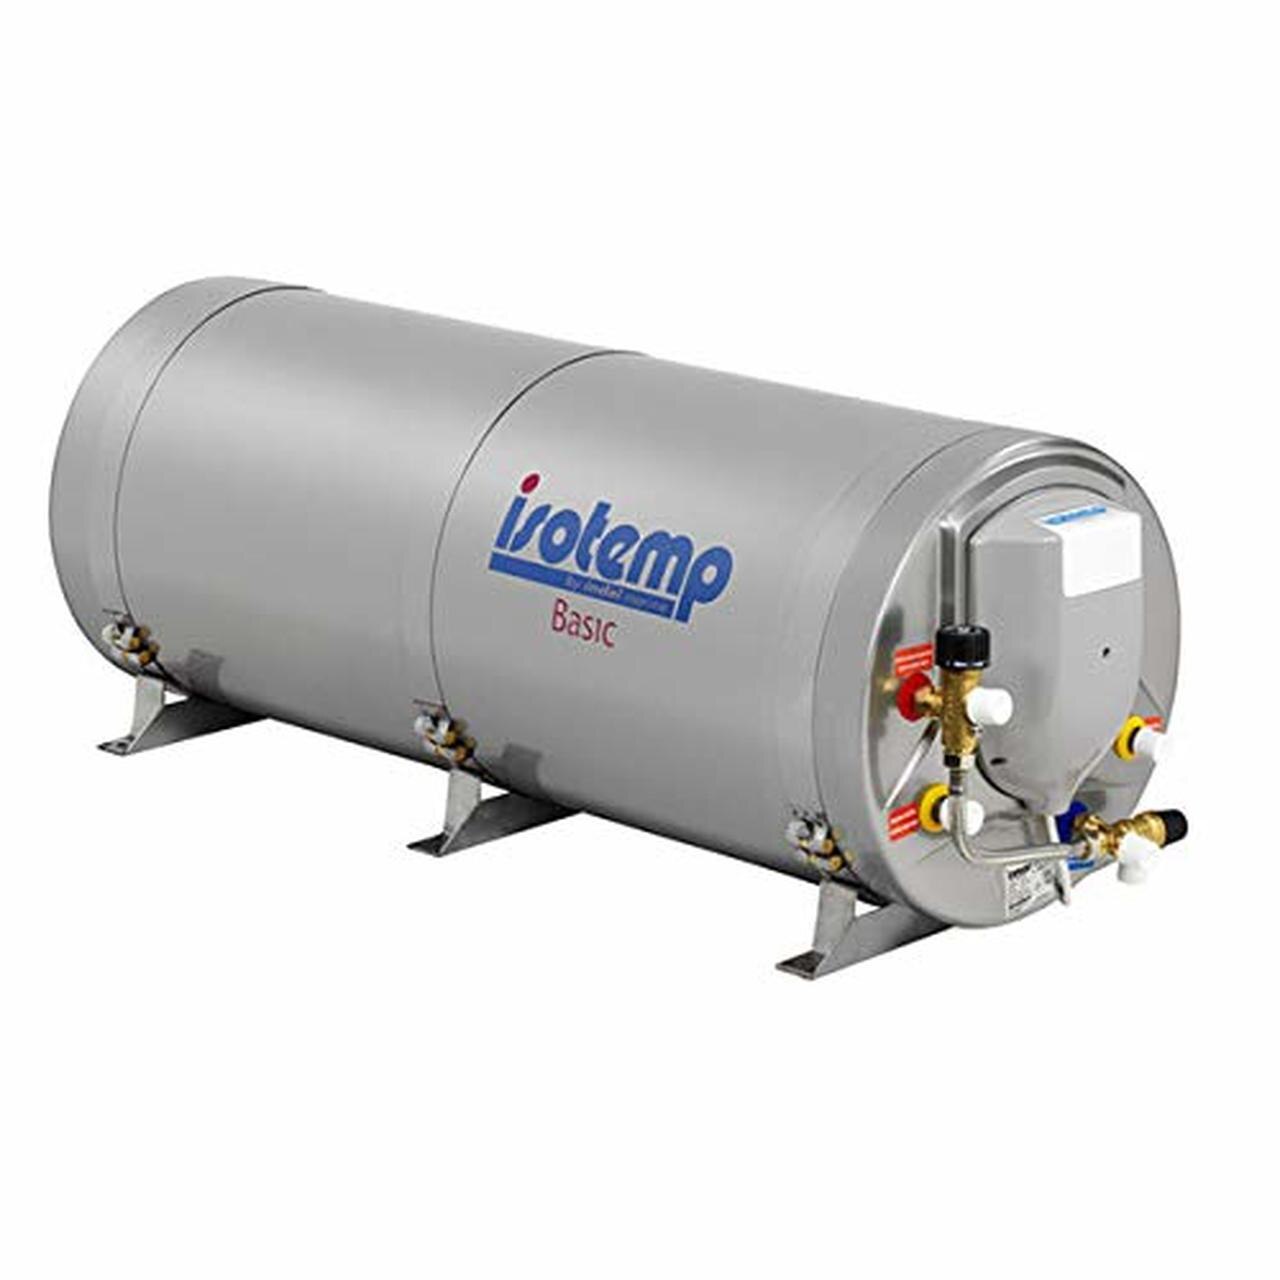 Isotemp Waterheater Basic 75L, 20 gallon 115V/750W with mixing valve, USA Plug